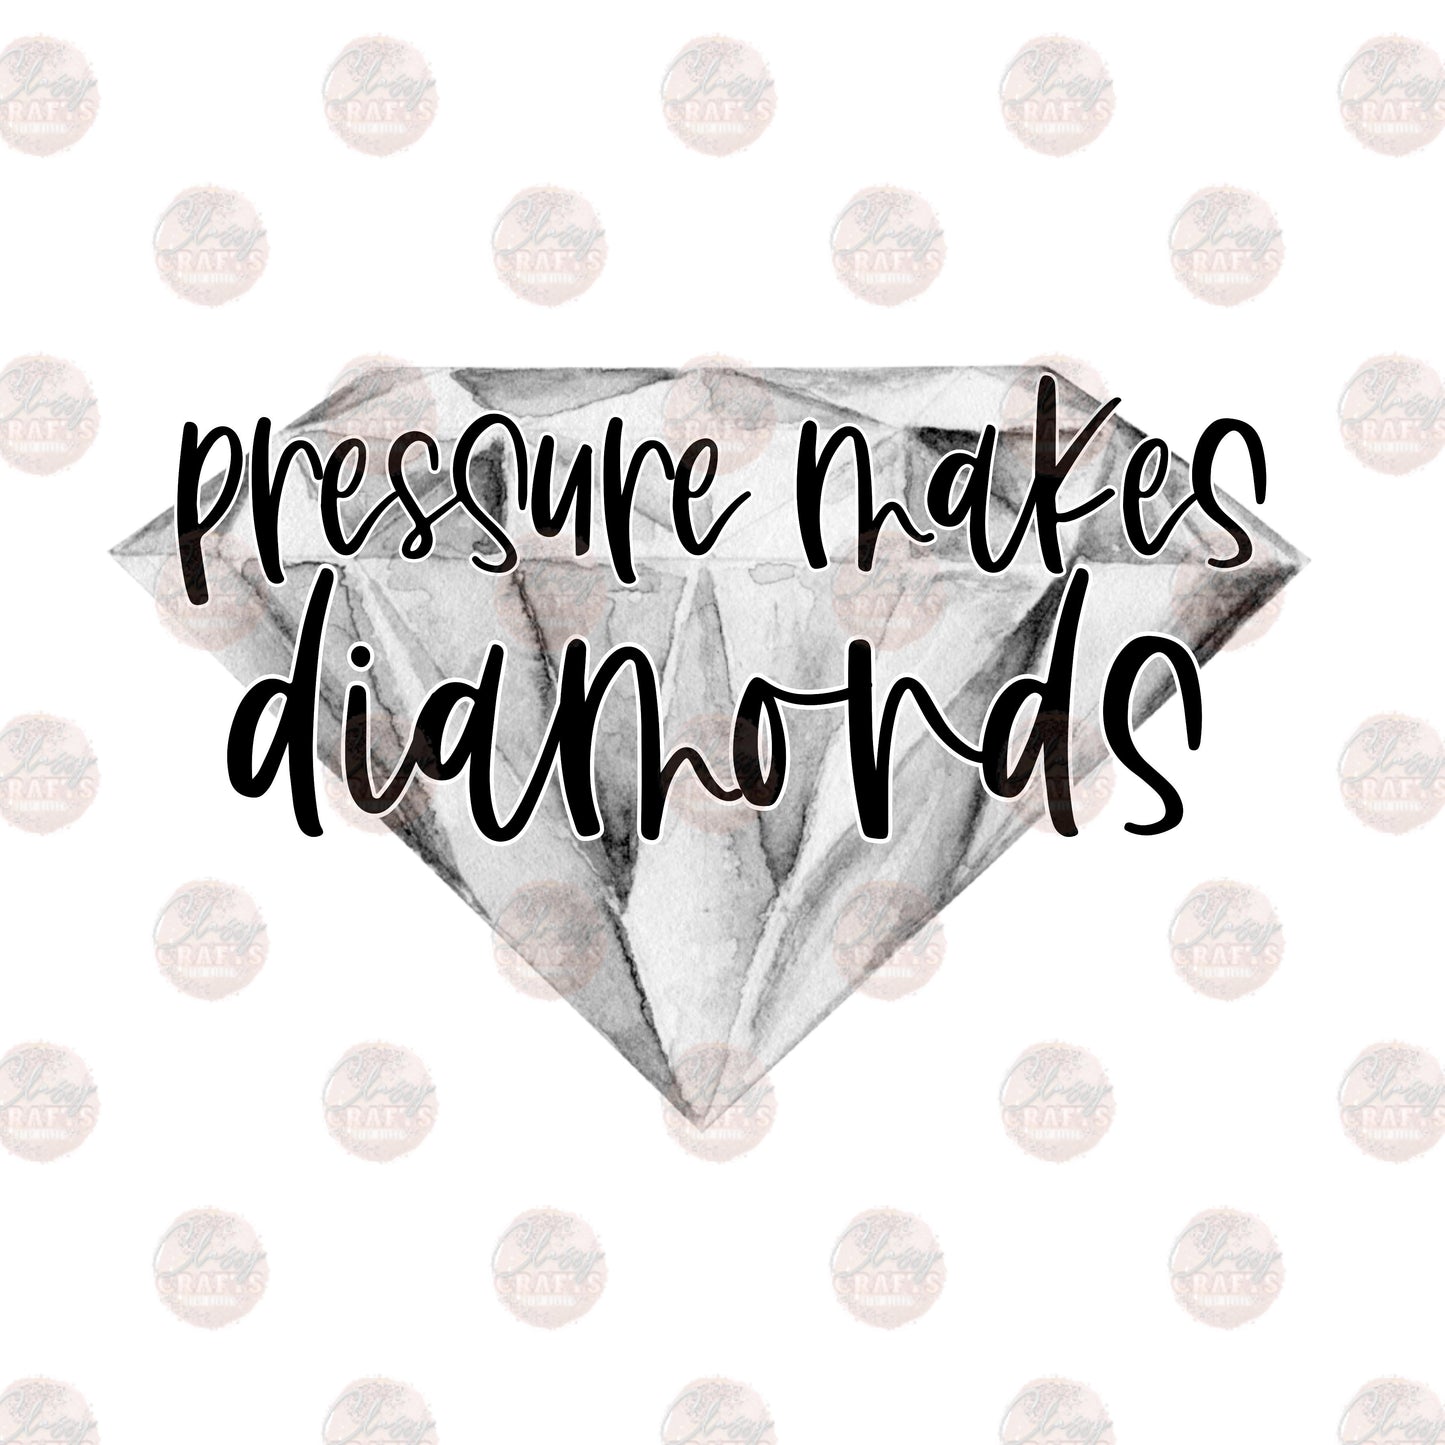 Pressure Makes Diamonds- Sublimation Transfer